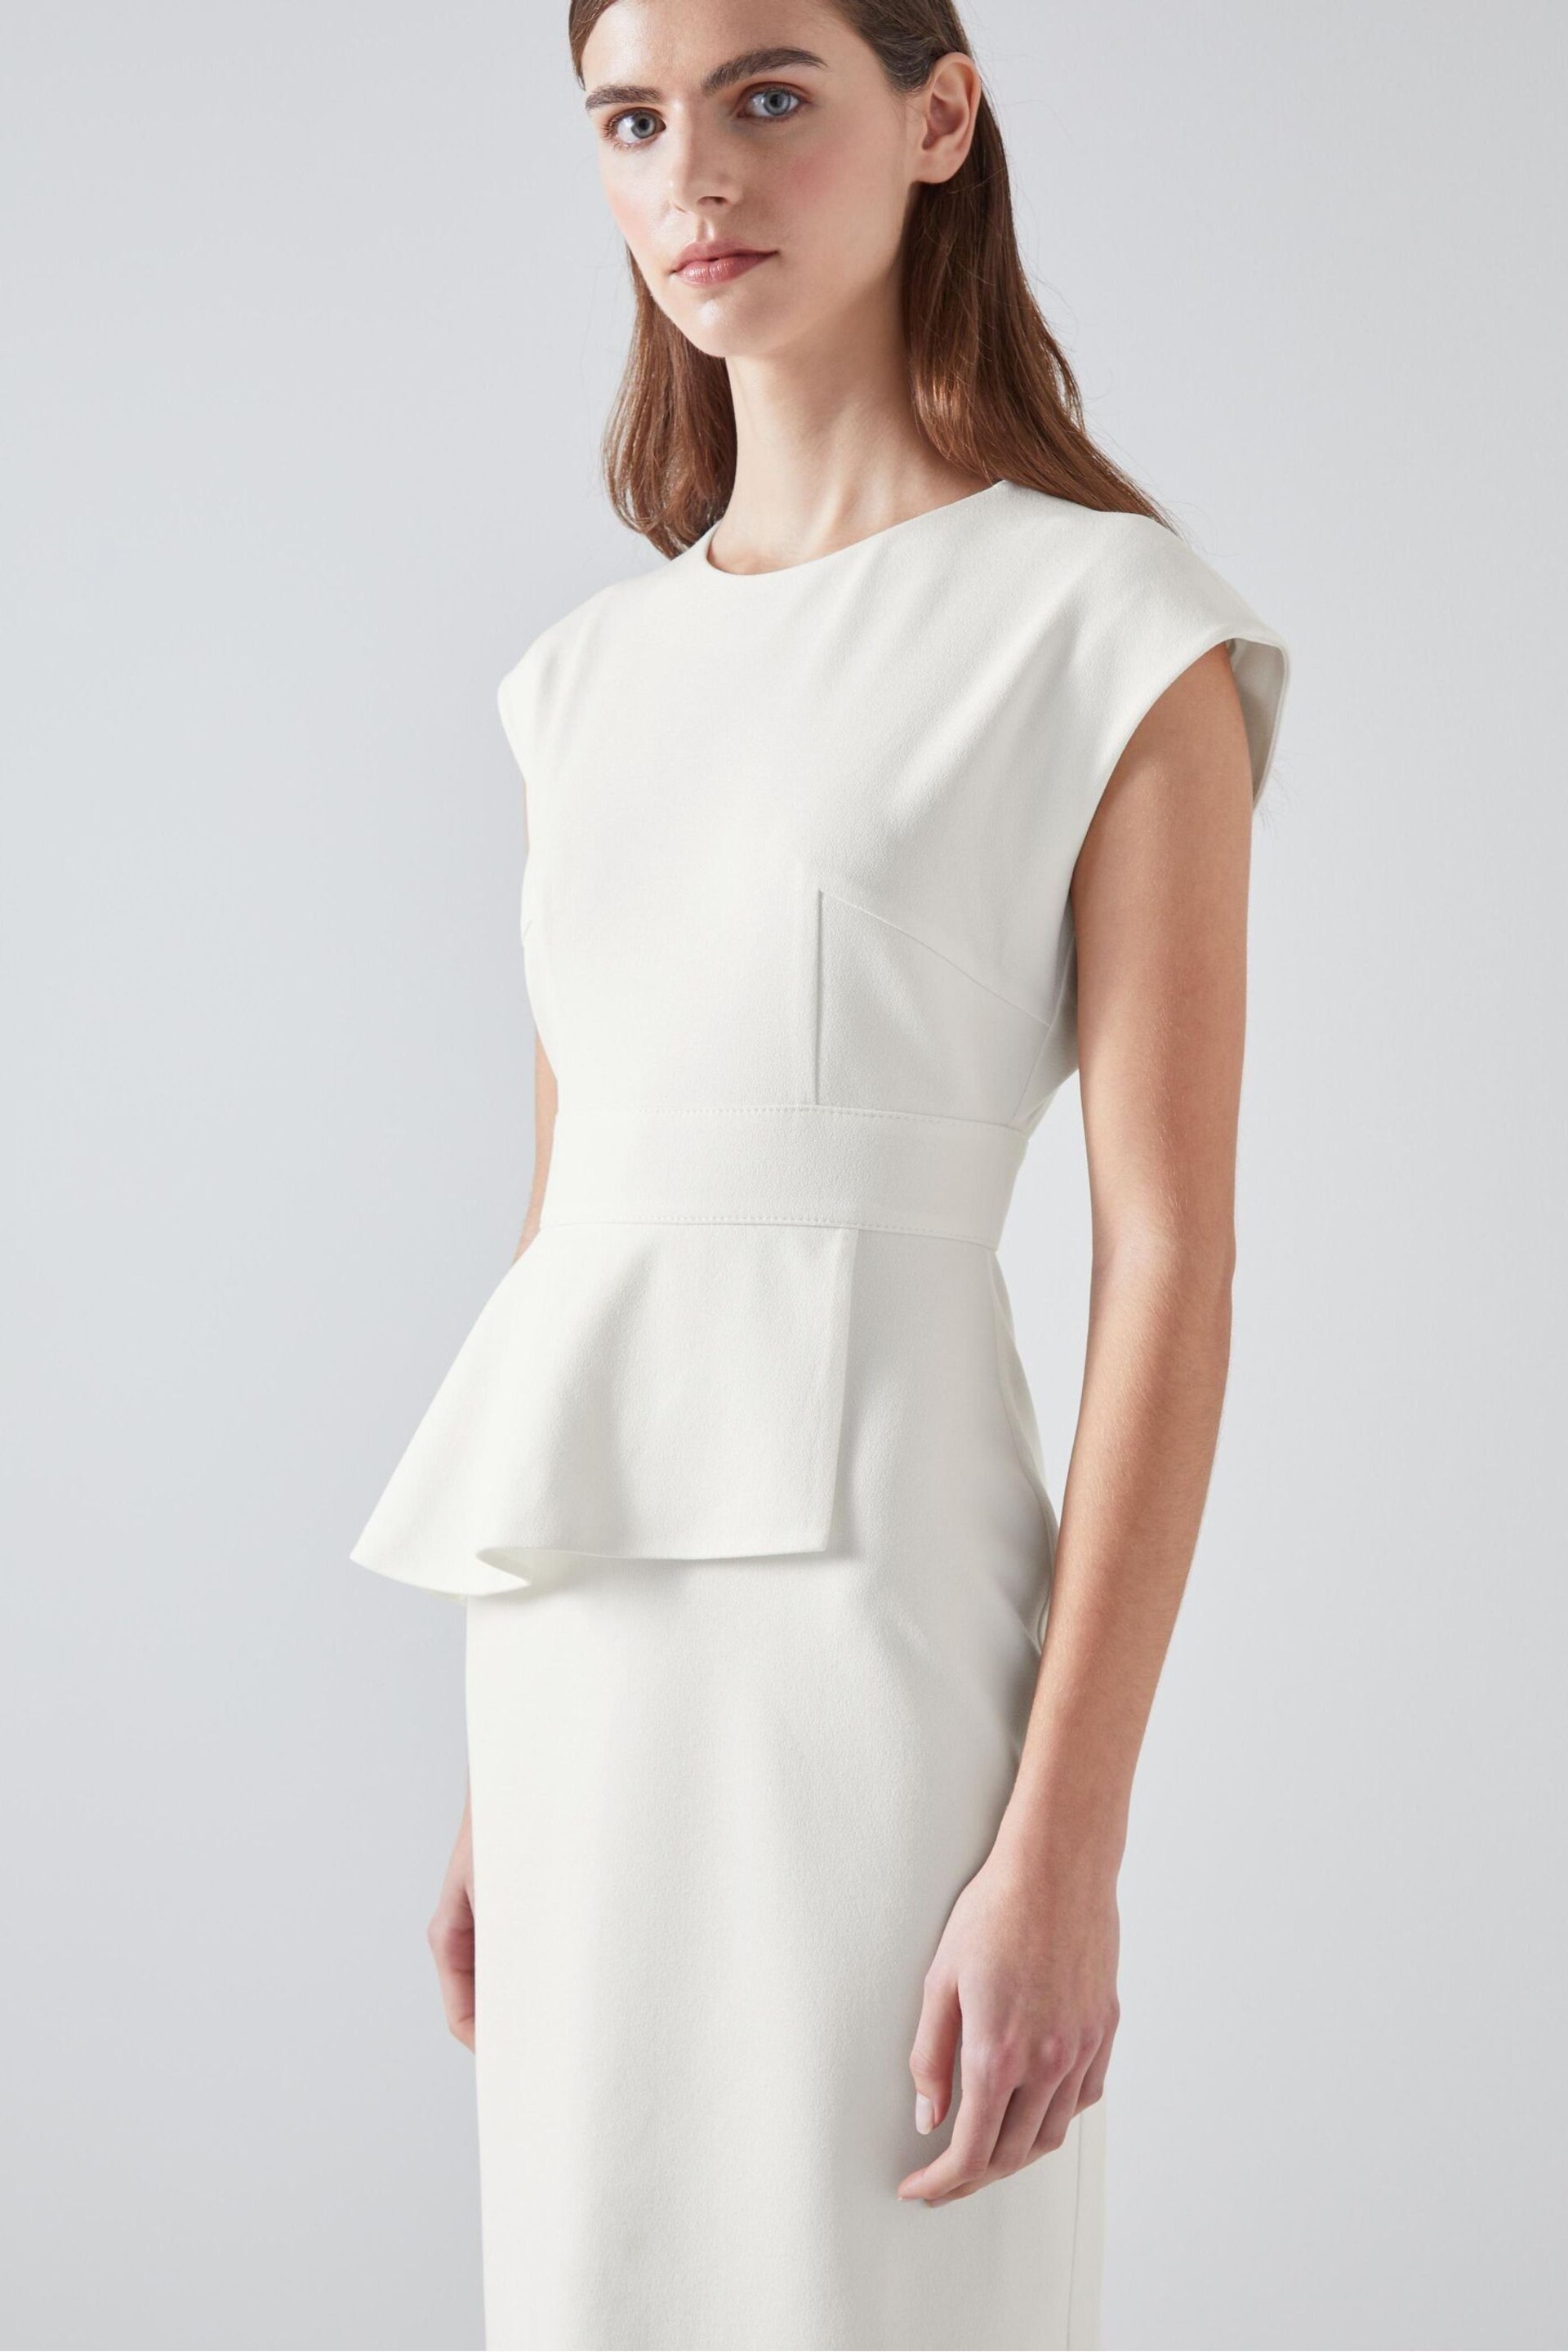 LK Bennett Mia Lenzing™ Ecovero™ Viscose Blend Dress - Image 1 of 4